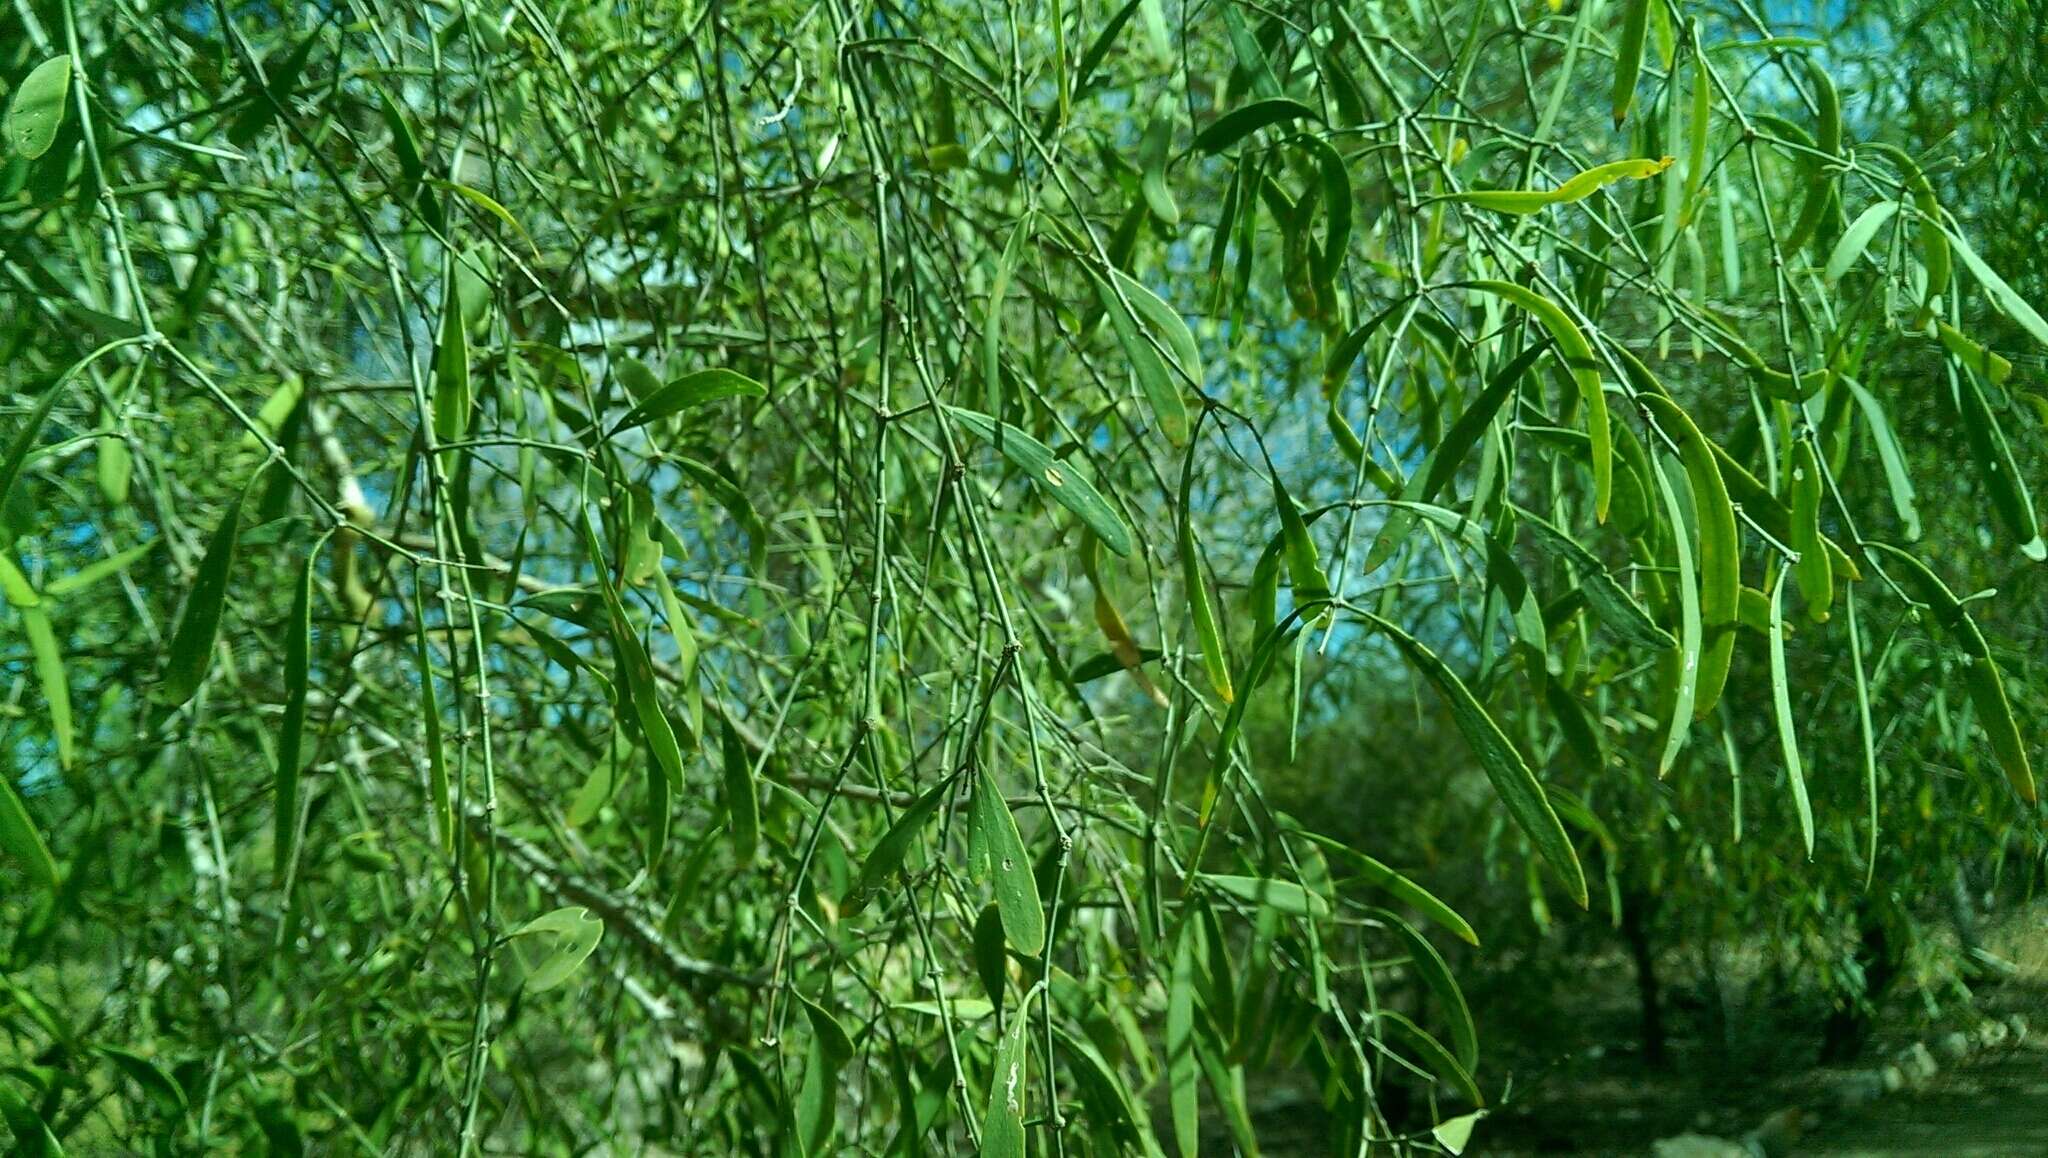 Image of Salvadora angustifolia Turrill